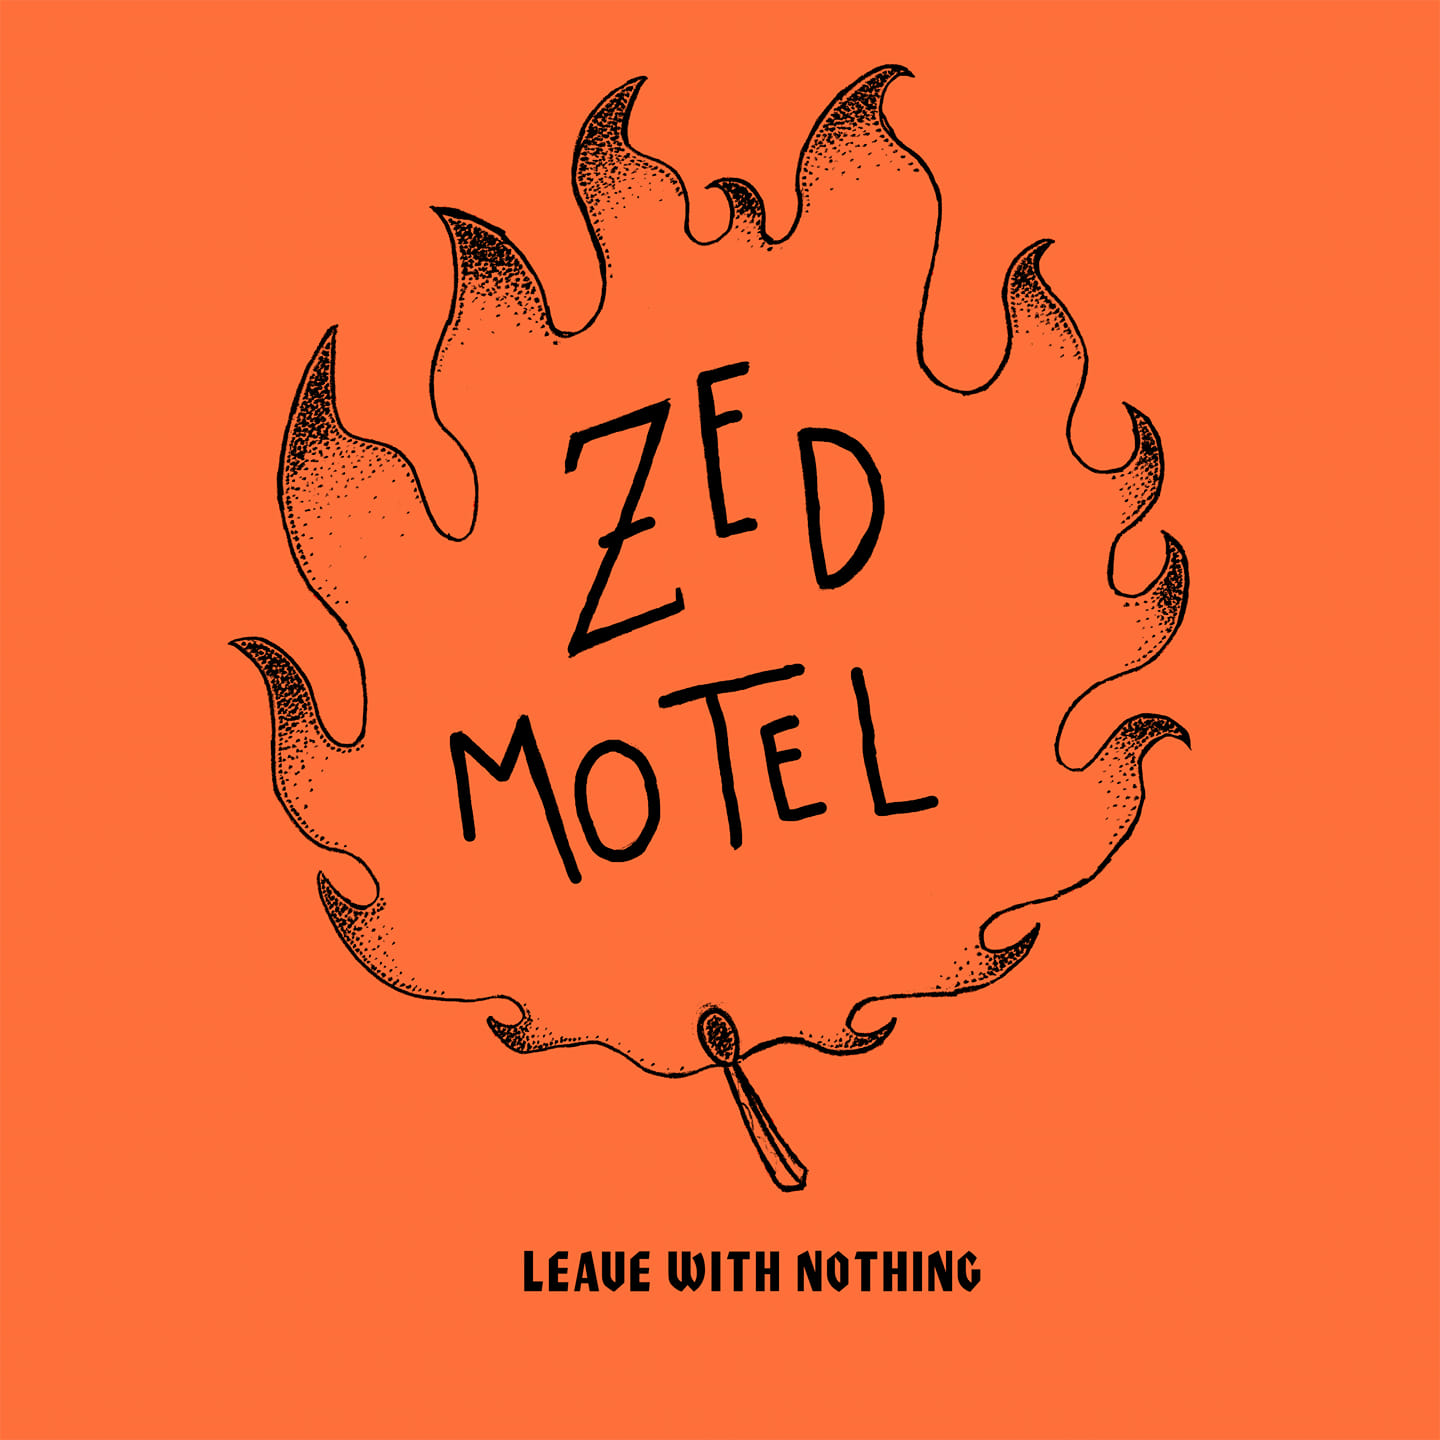 zed motel leave